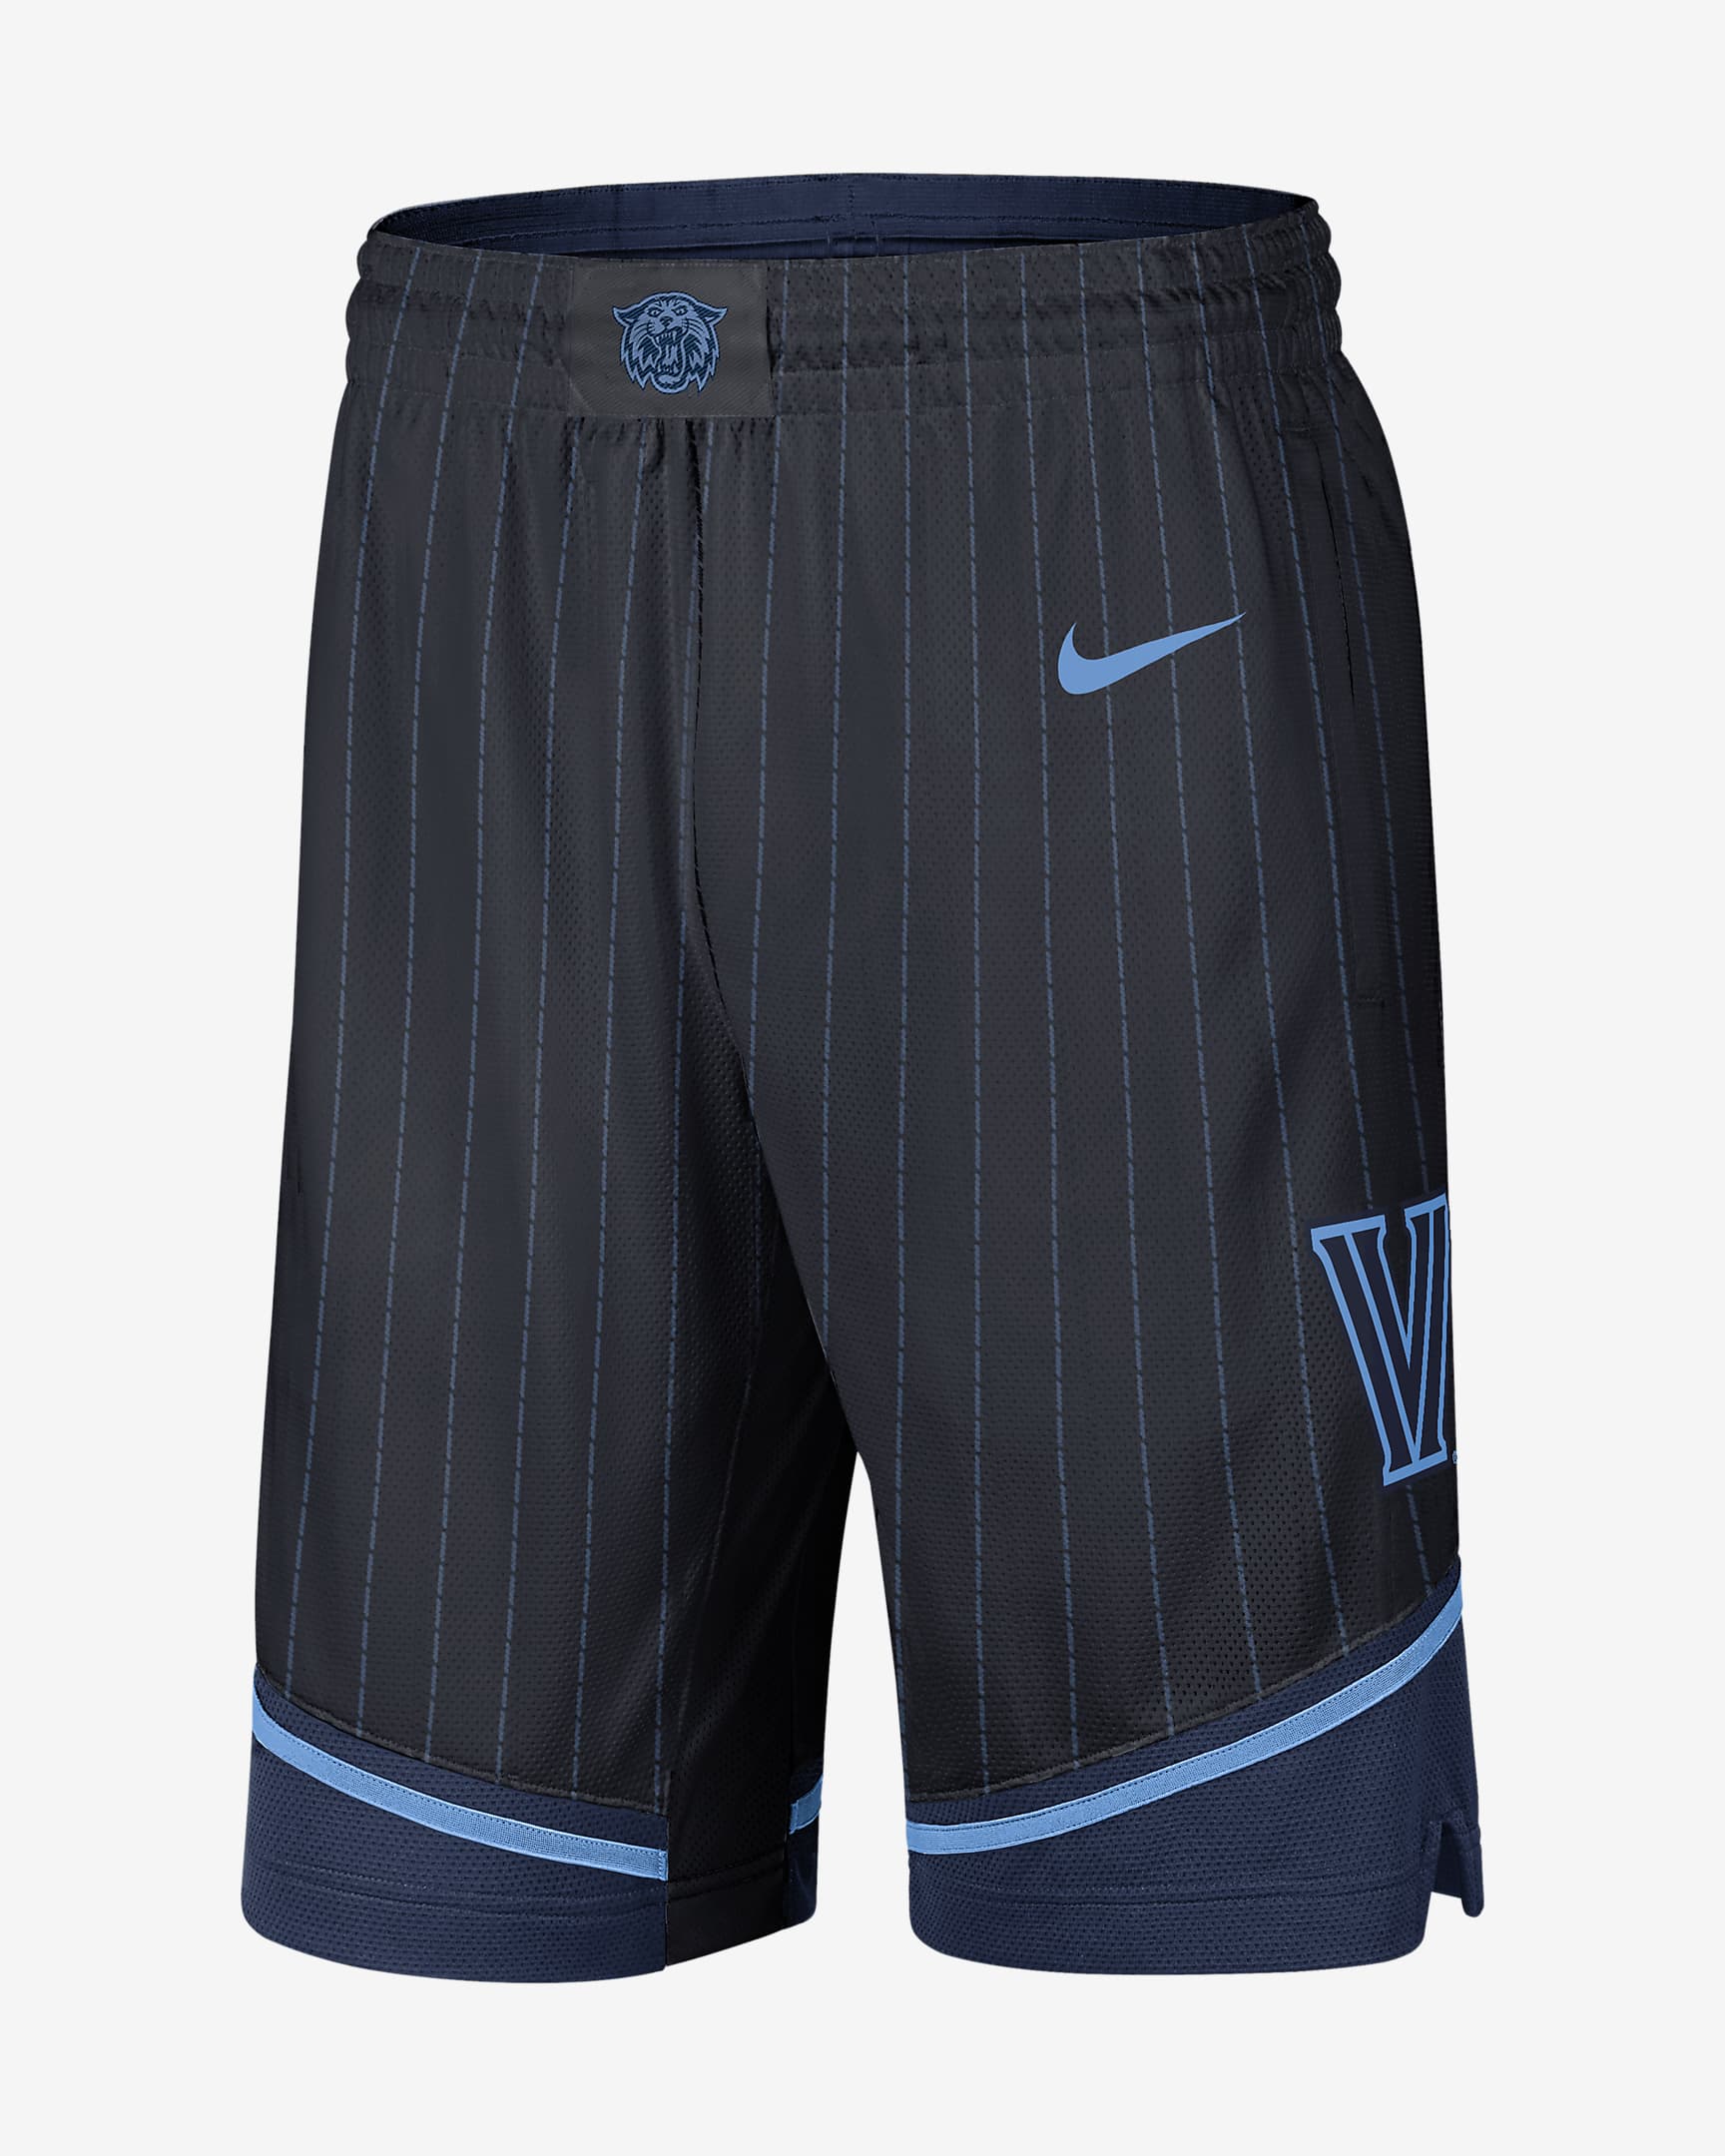 Nike College (Villanova) Men's Basketball Shorts. Nike.com